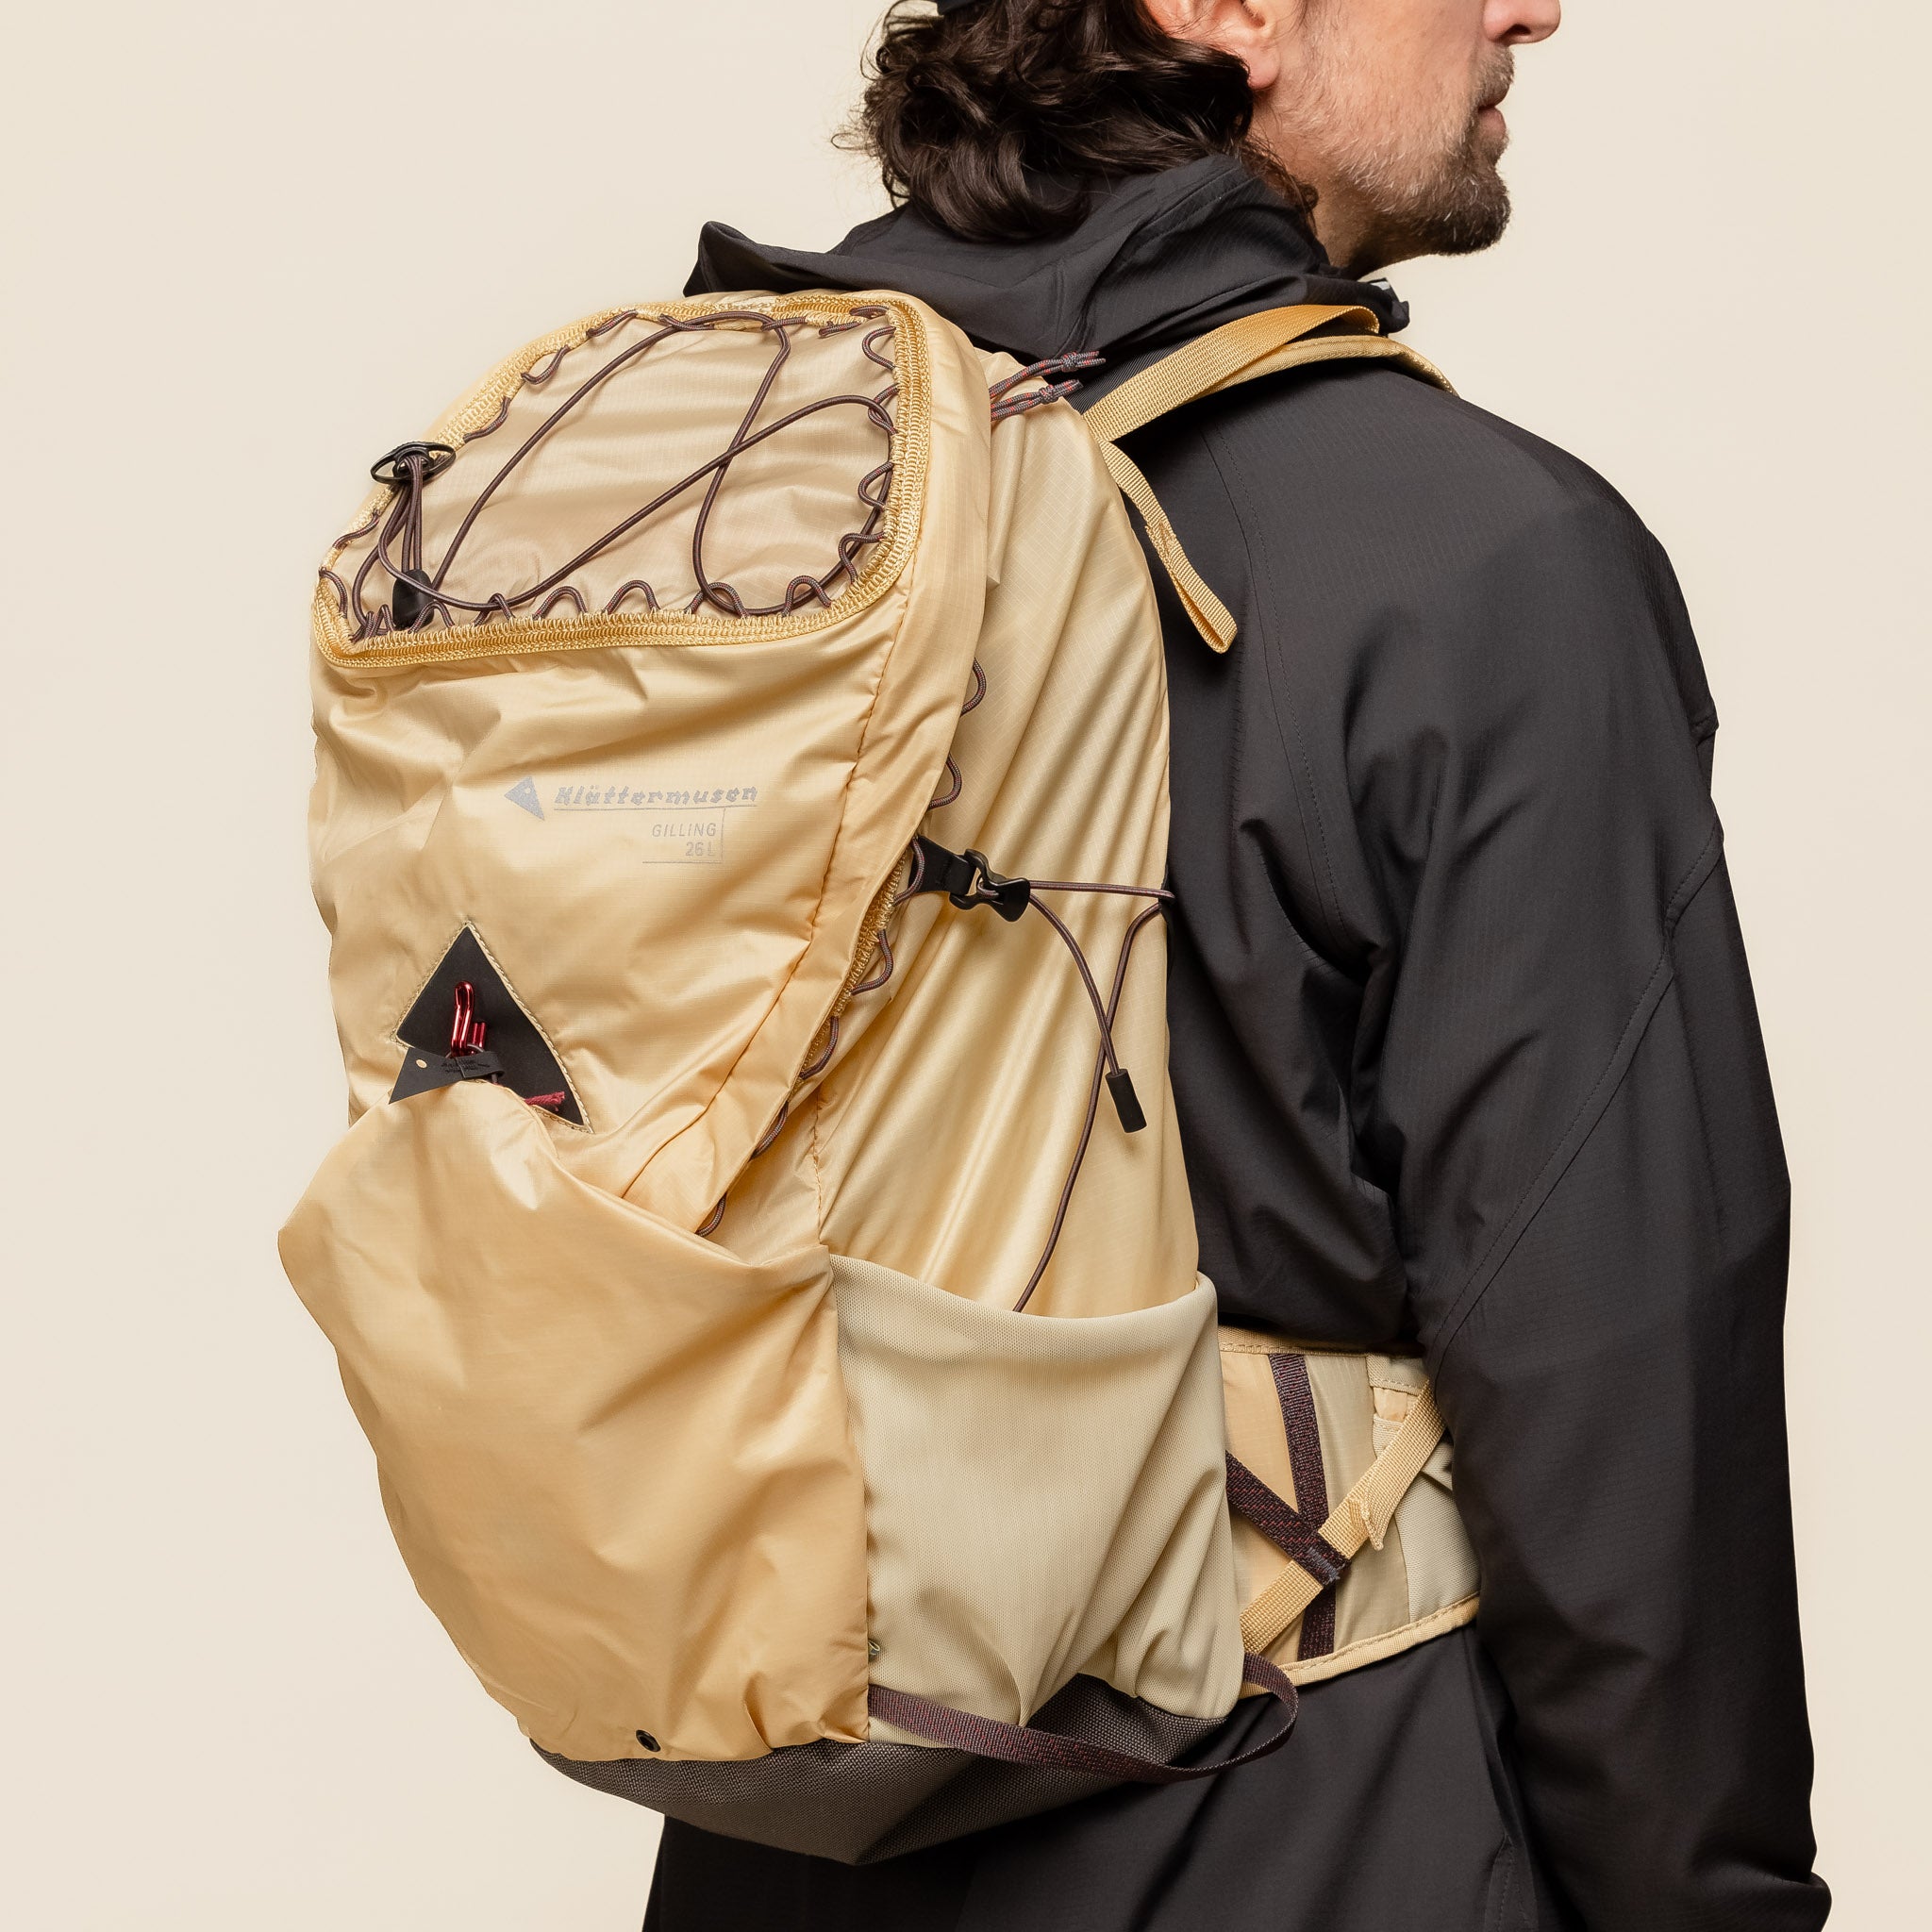 Klättermusen - Gilling Backpack 26L - Chaya Sand